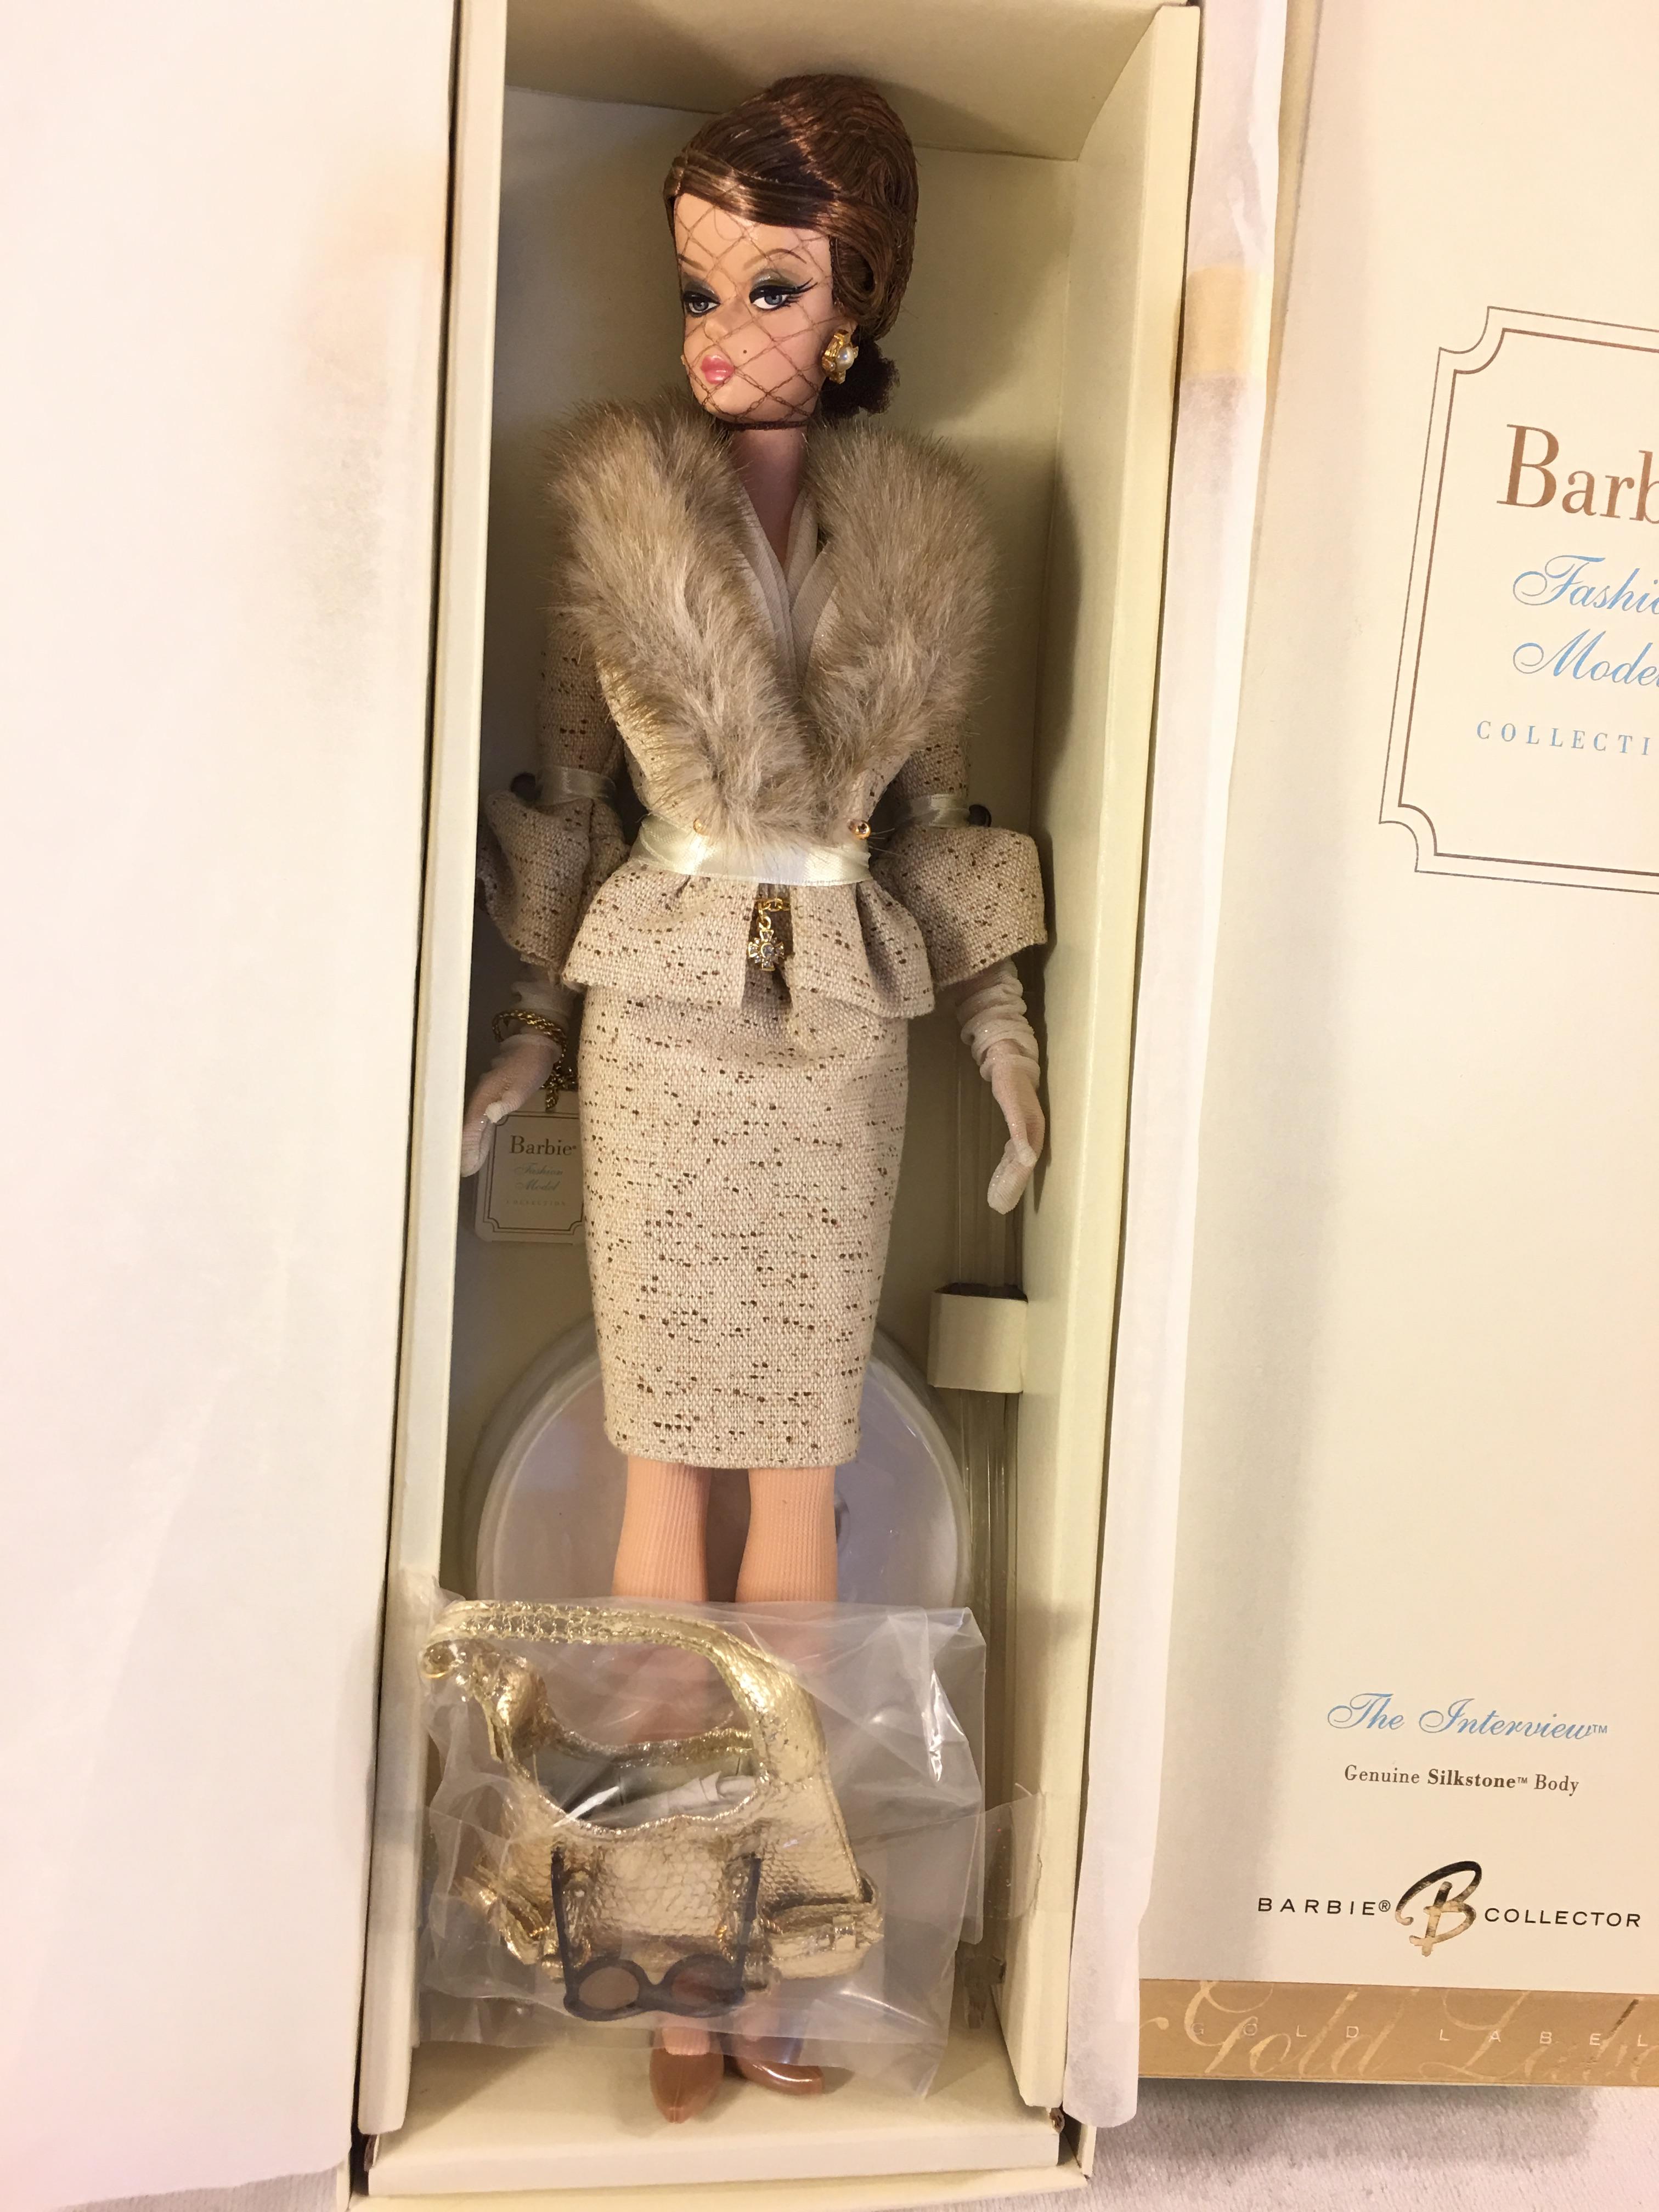 NIB Collector Genuine Silkstone Body Gold Label "The Interview" Fashion Model Barbie Doll Box: 13.5"